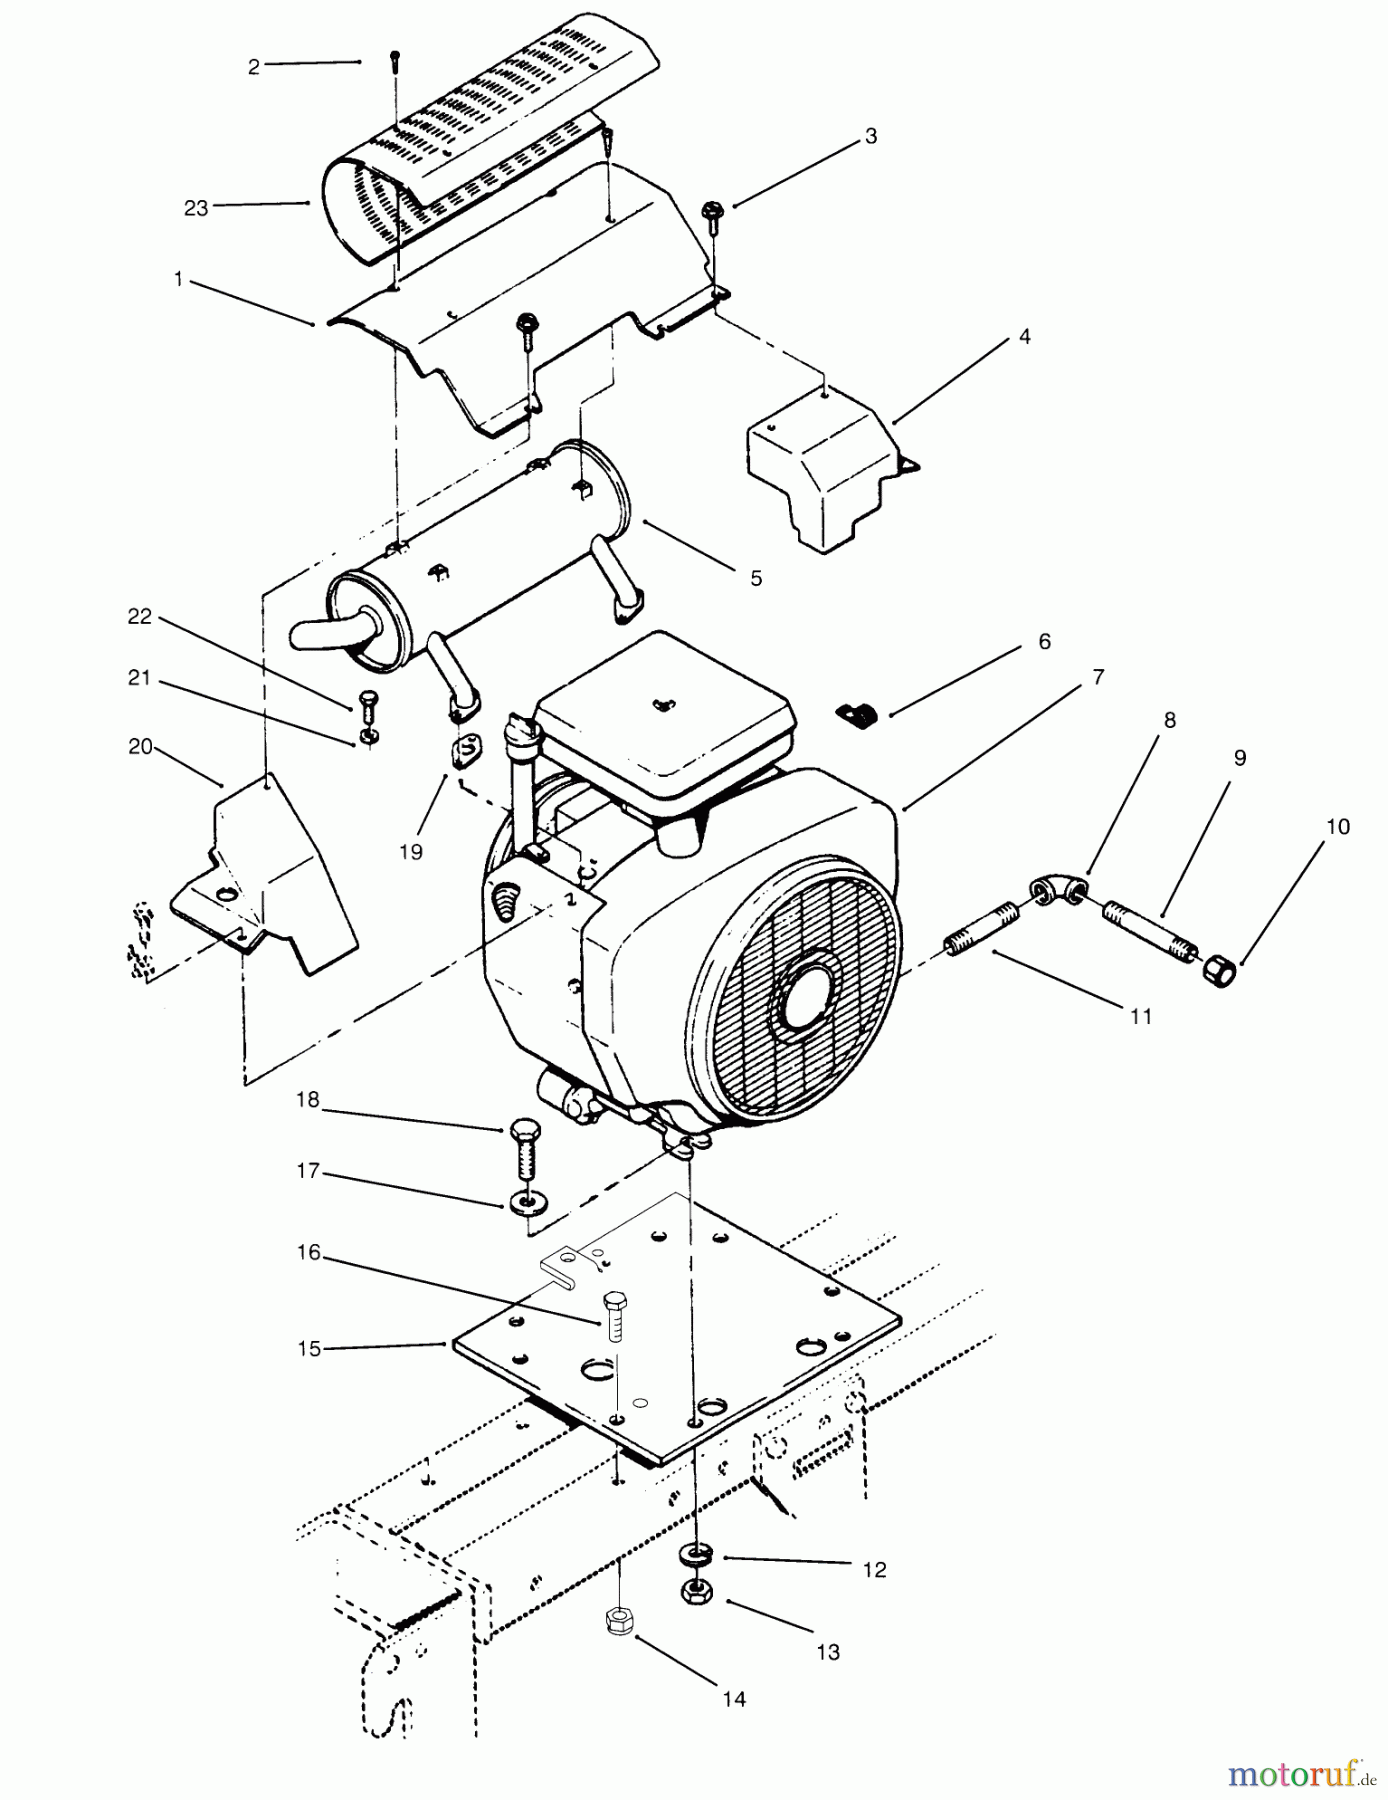  Toro Neu Mowers, Lawn & Garden Tractor Seite 1 73501 (520-H) - Toro 520-H Garden Tractor, 1995 (59000412-59002868) ENGINE AND EXHAUST